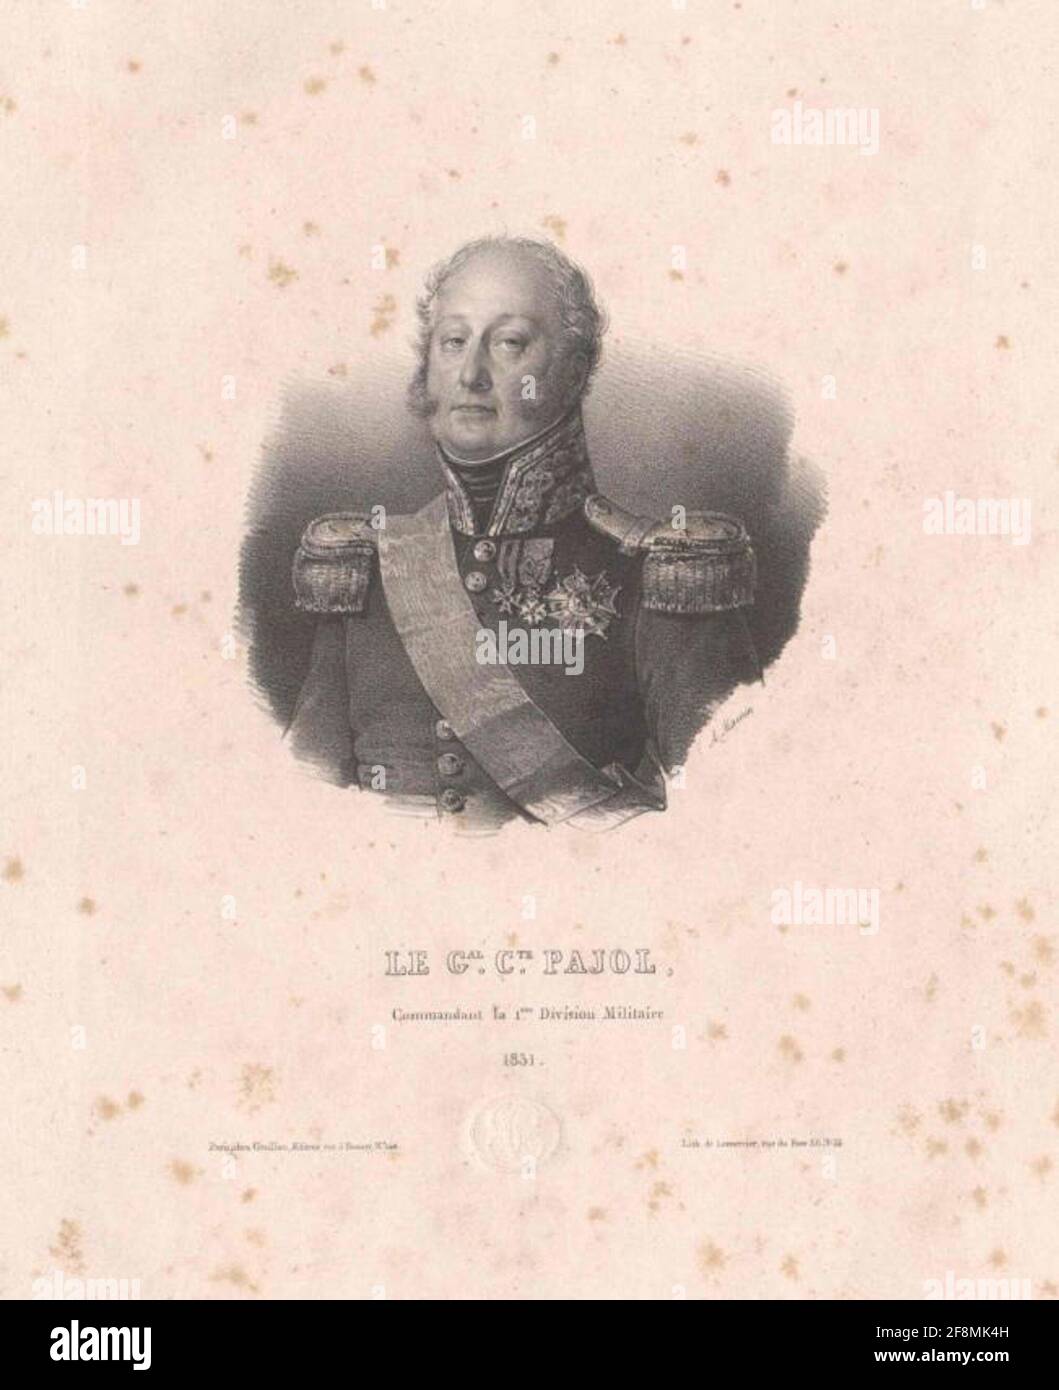 Pajol, Claude Pierre Comte. Stockfoto